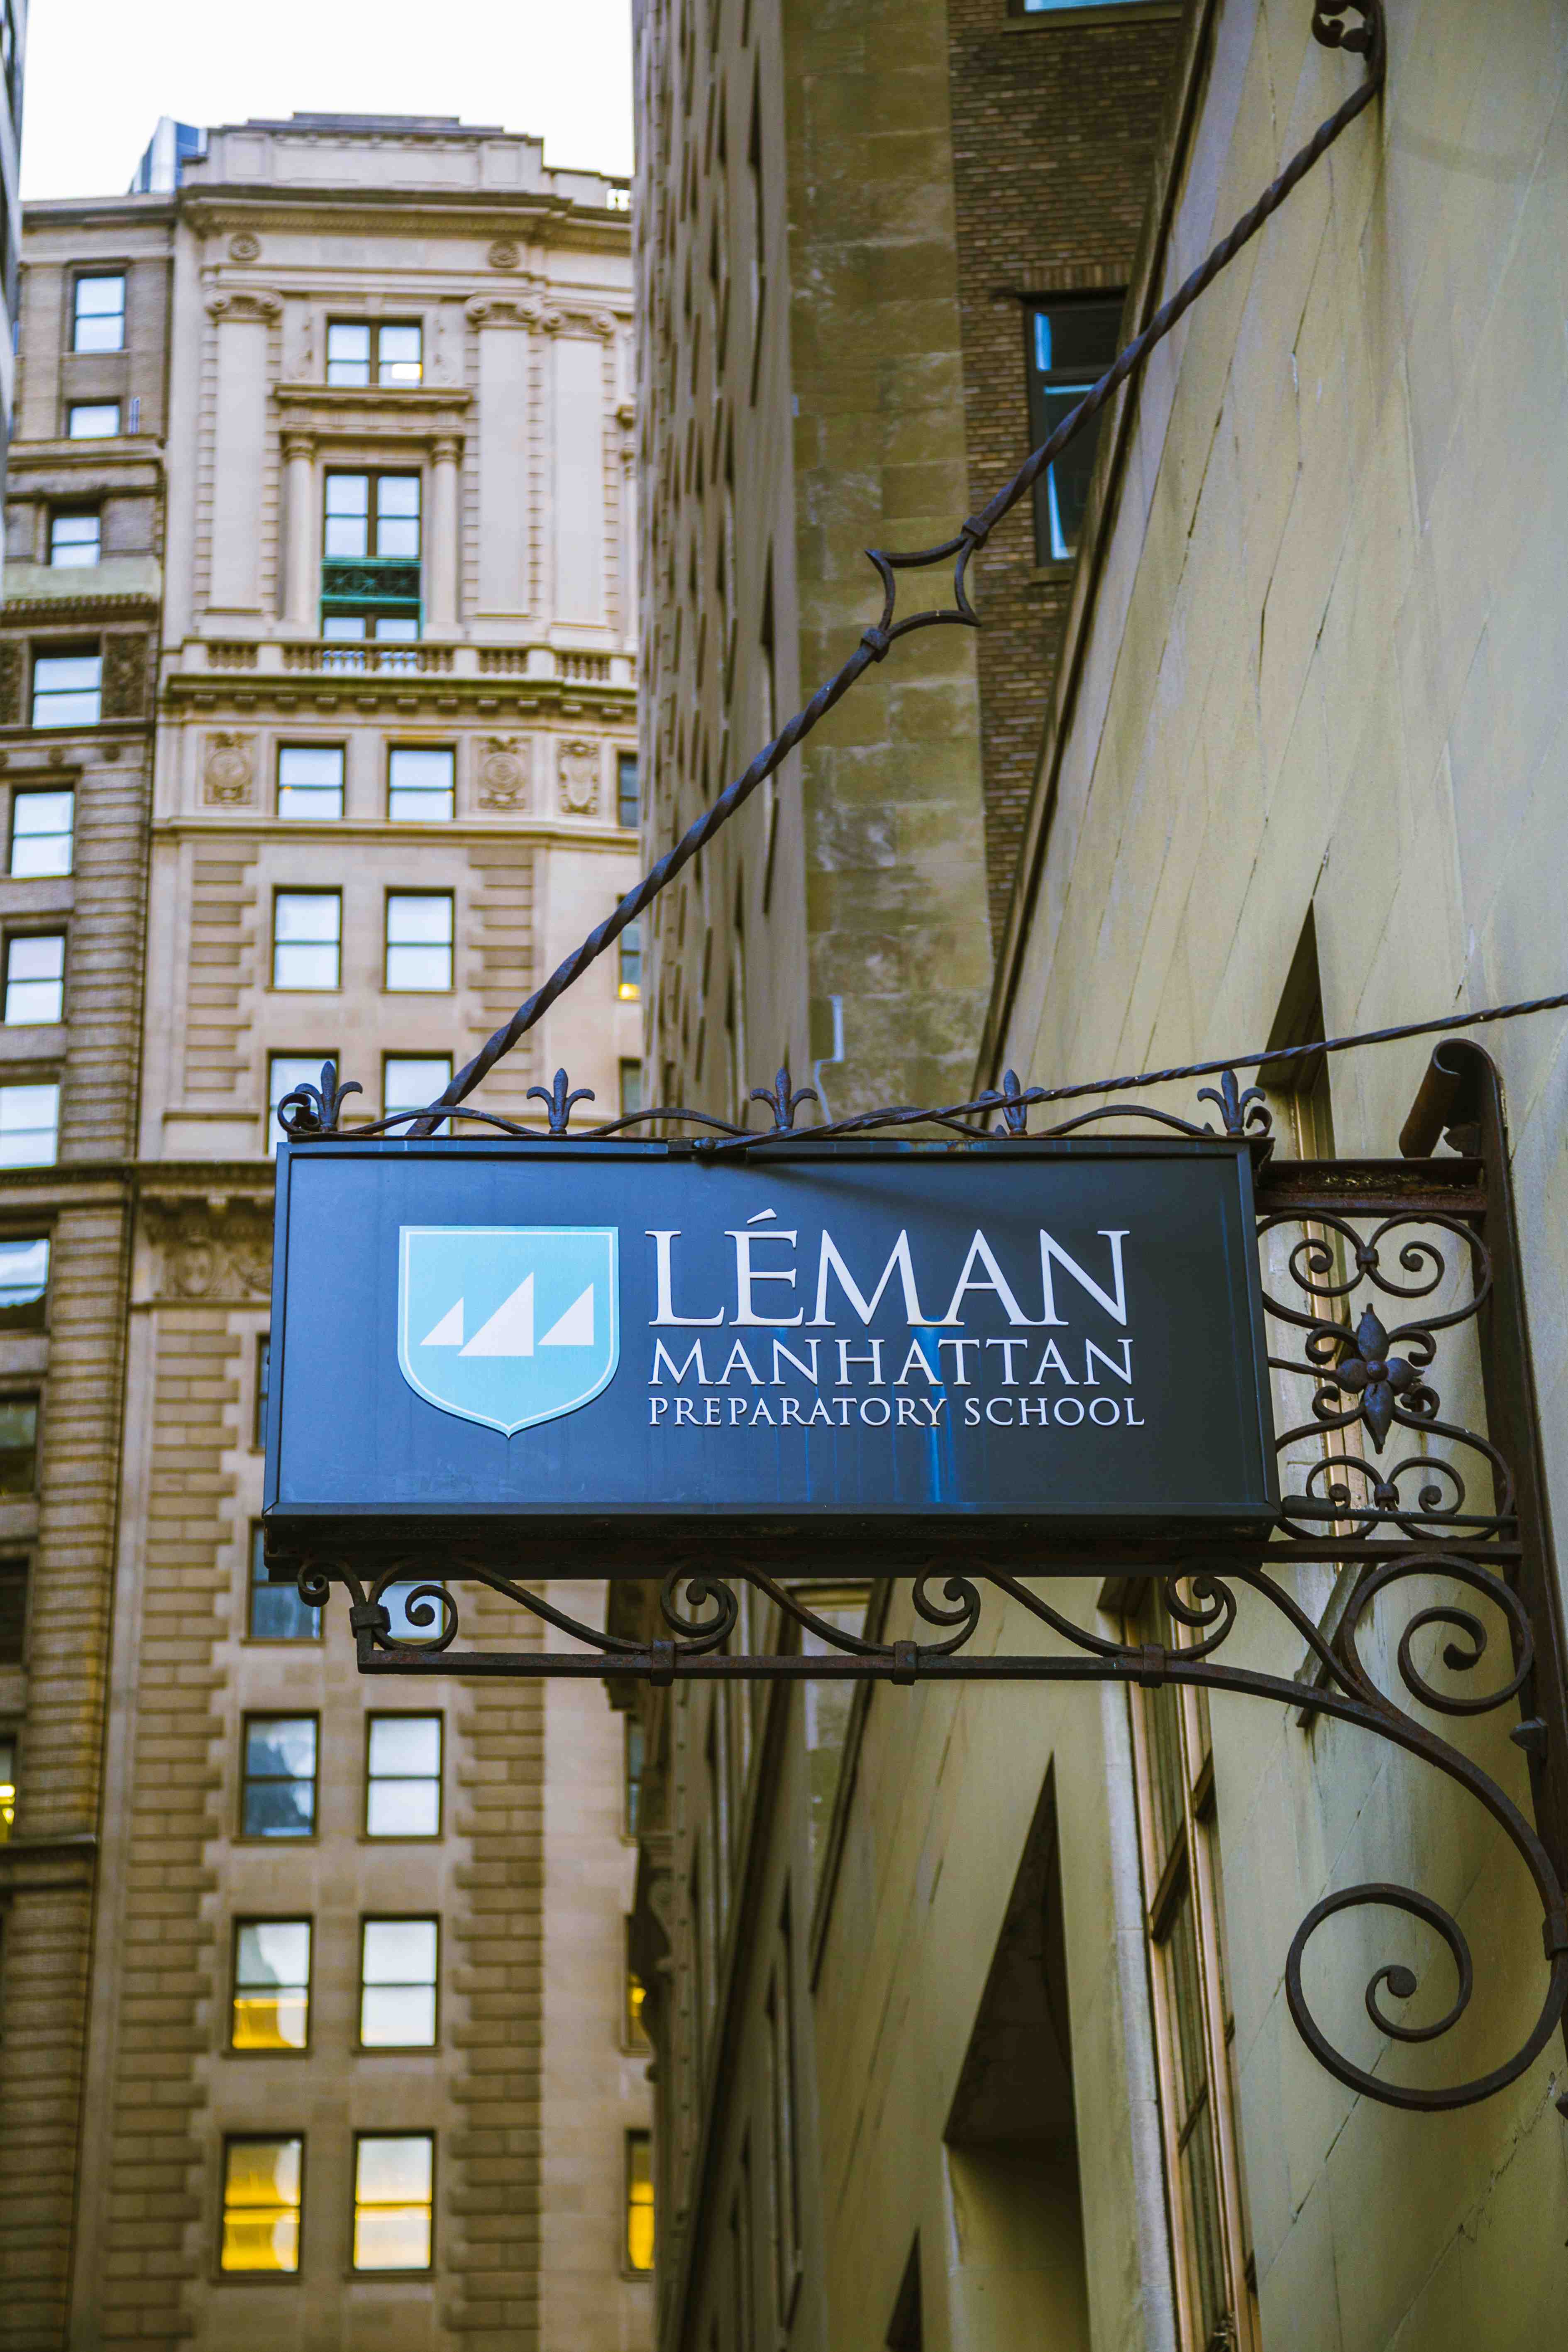 Leman Manhattan Preparatory School